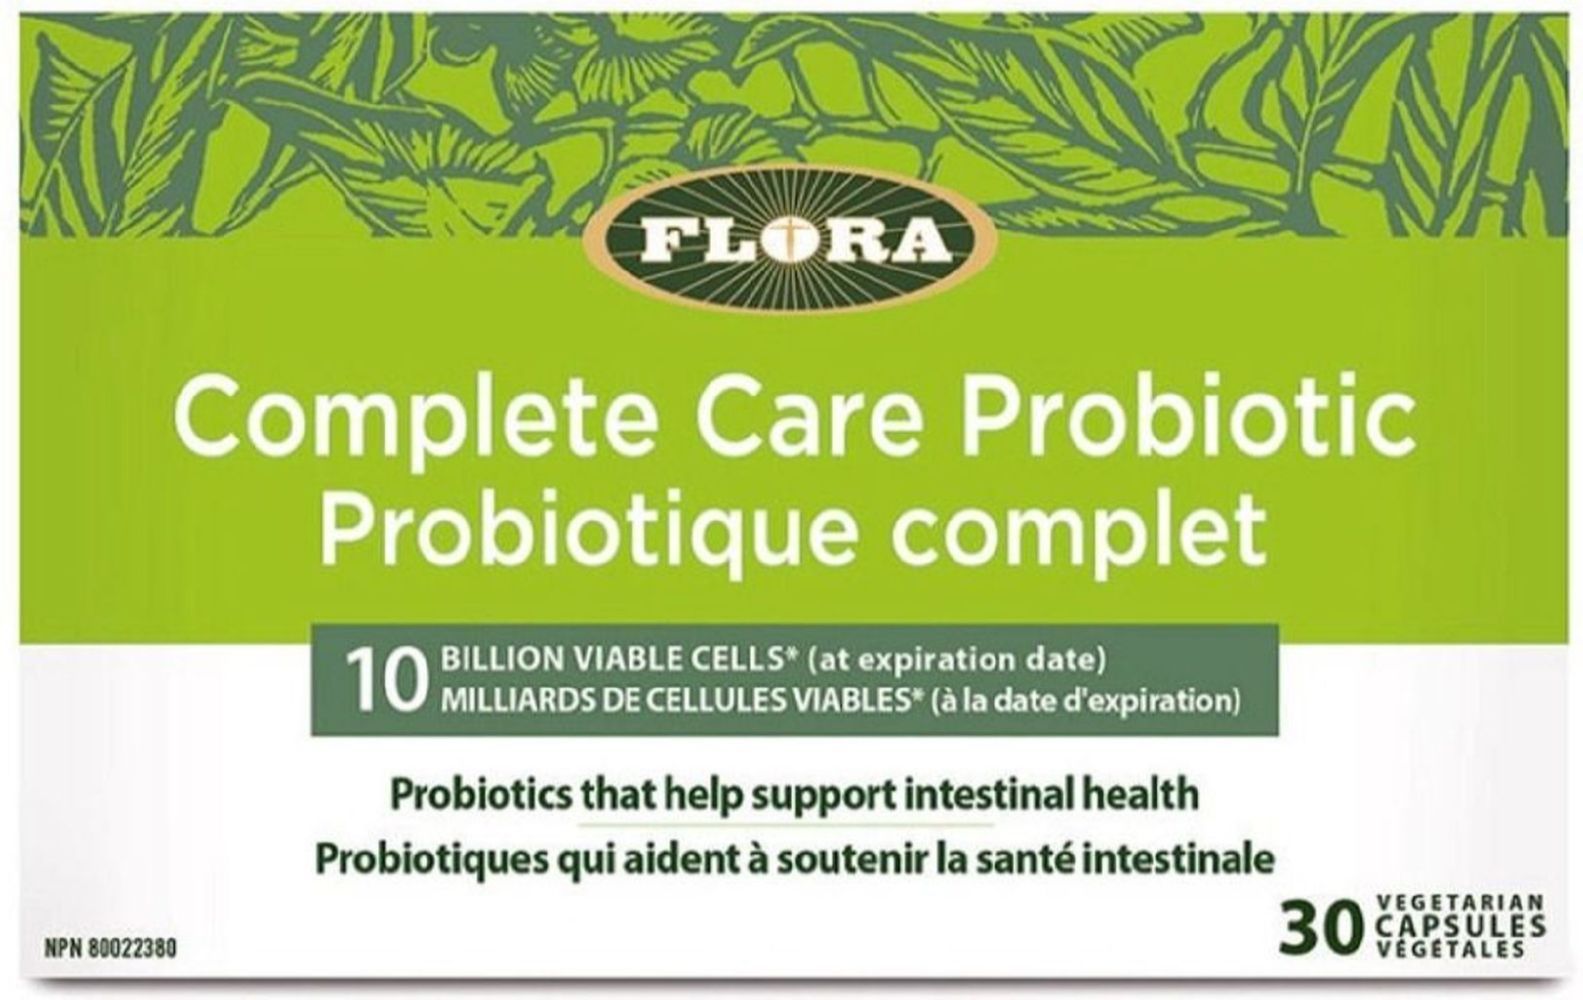 FLORA Complete Care Probiotic (Shelf Stable